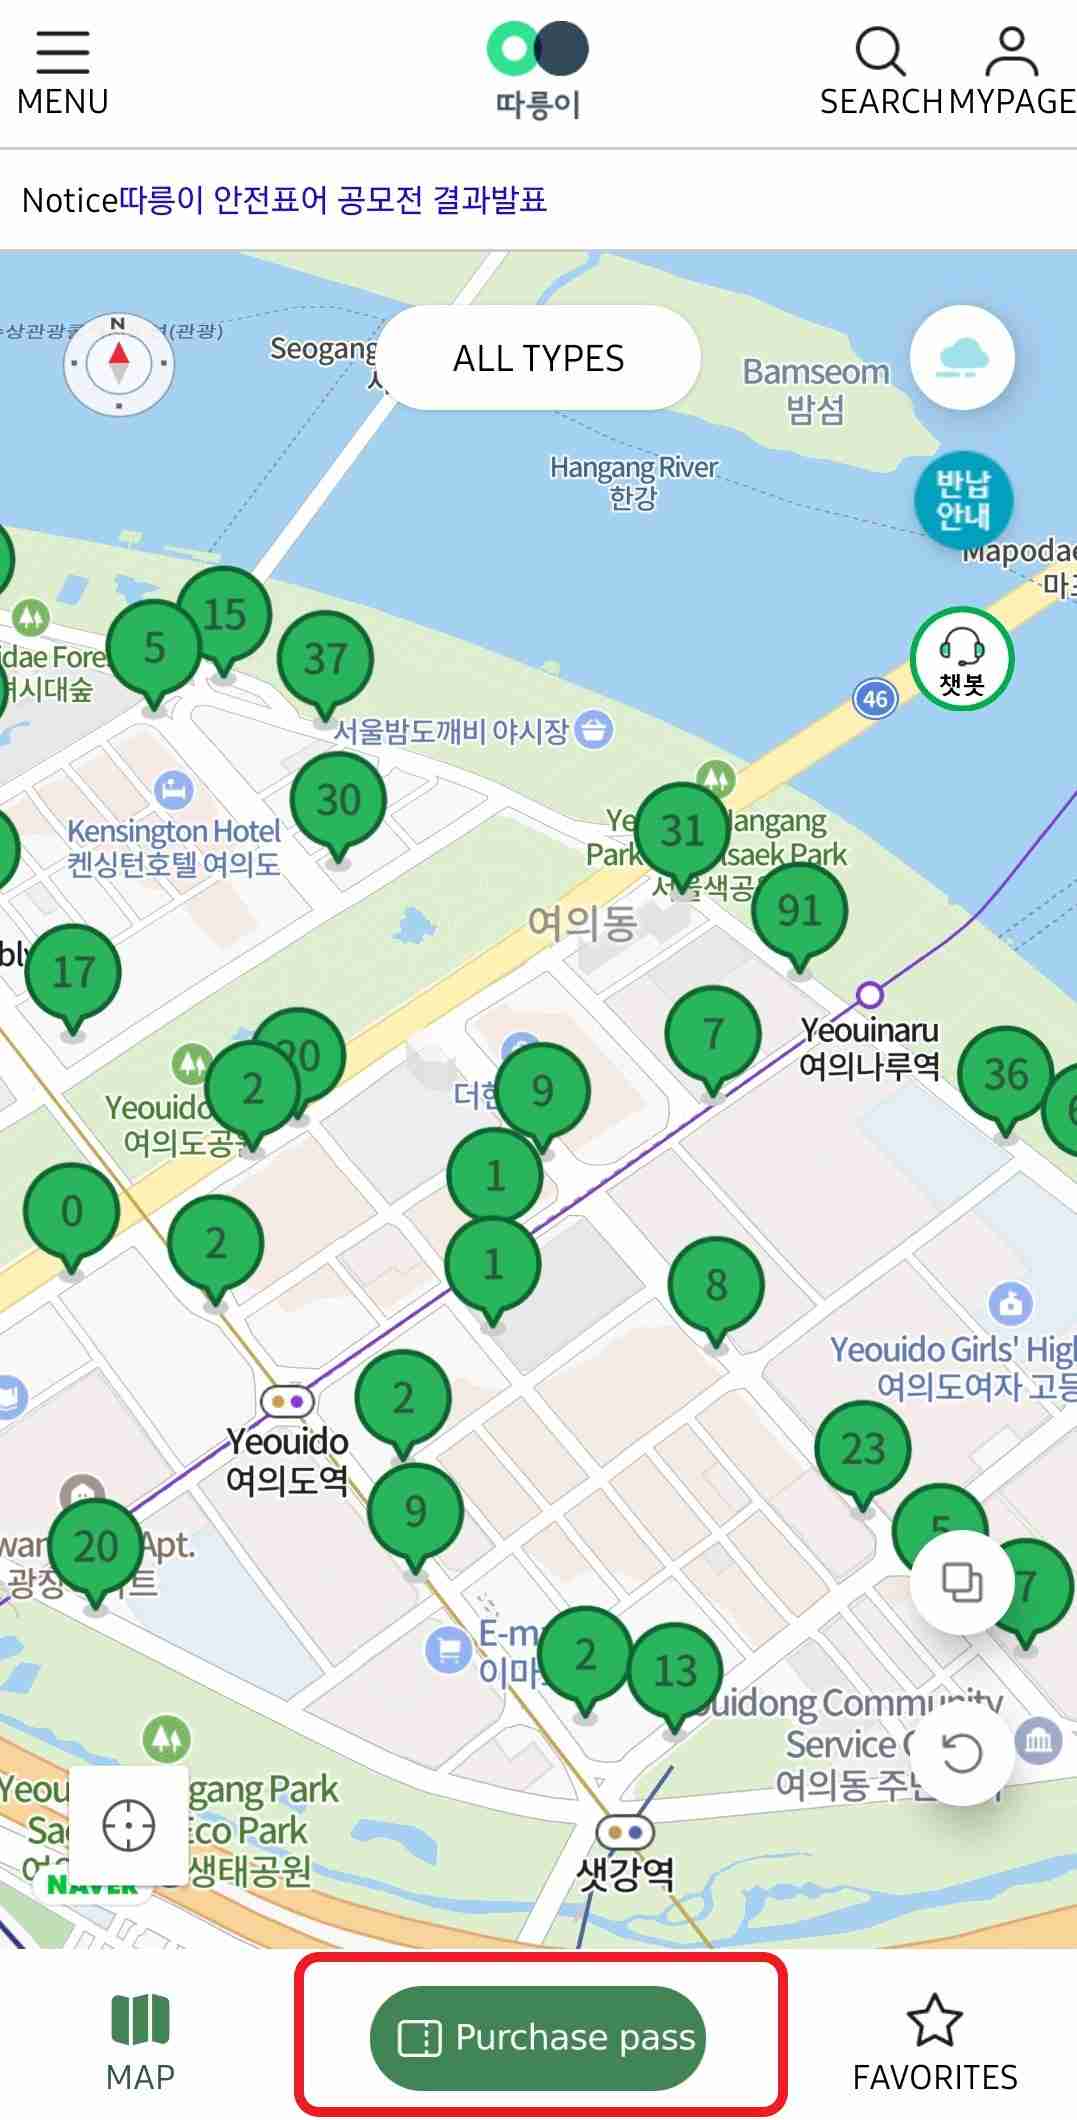 How to rent a Ddareungi, Seoul Bike